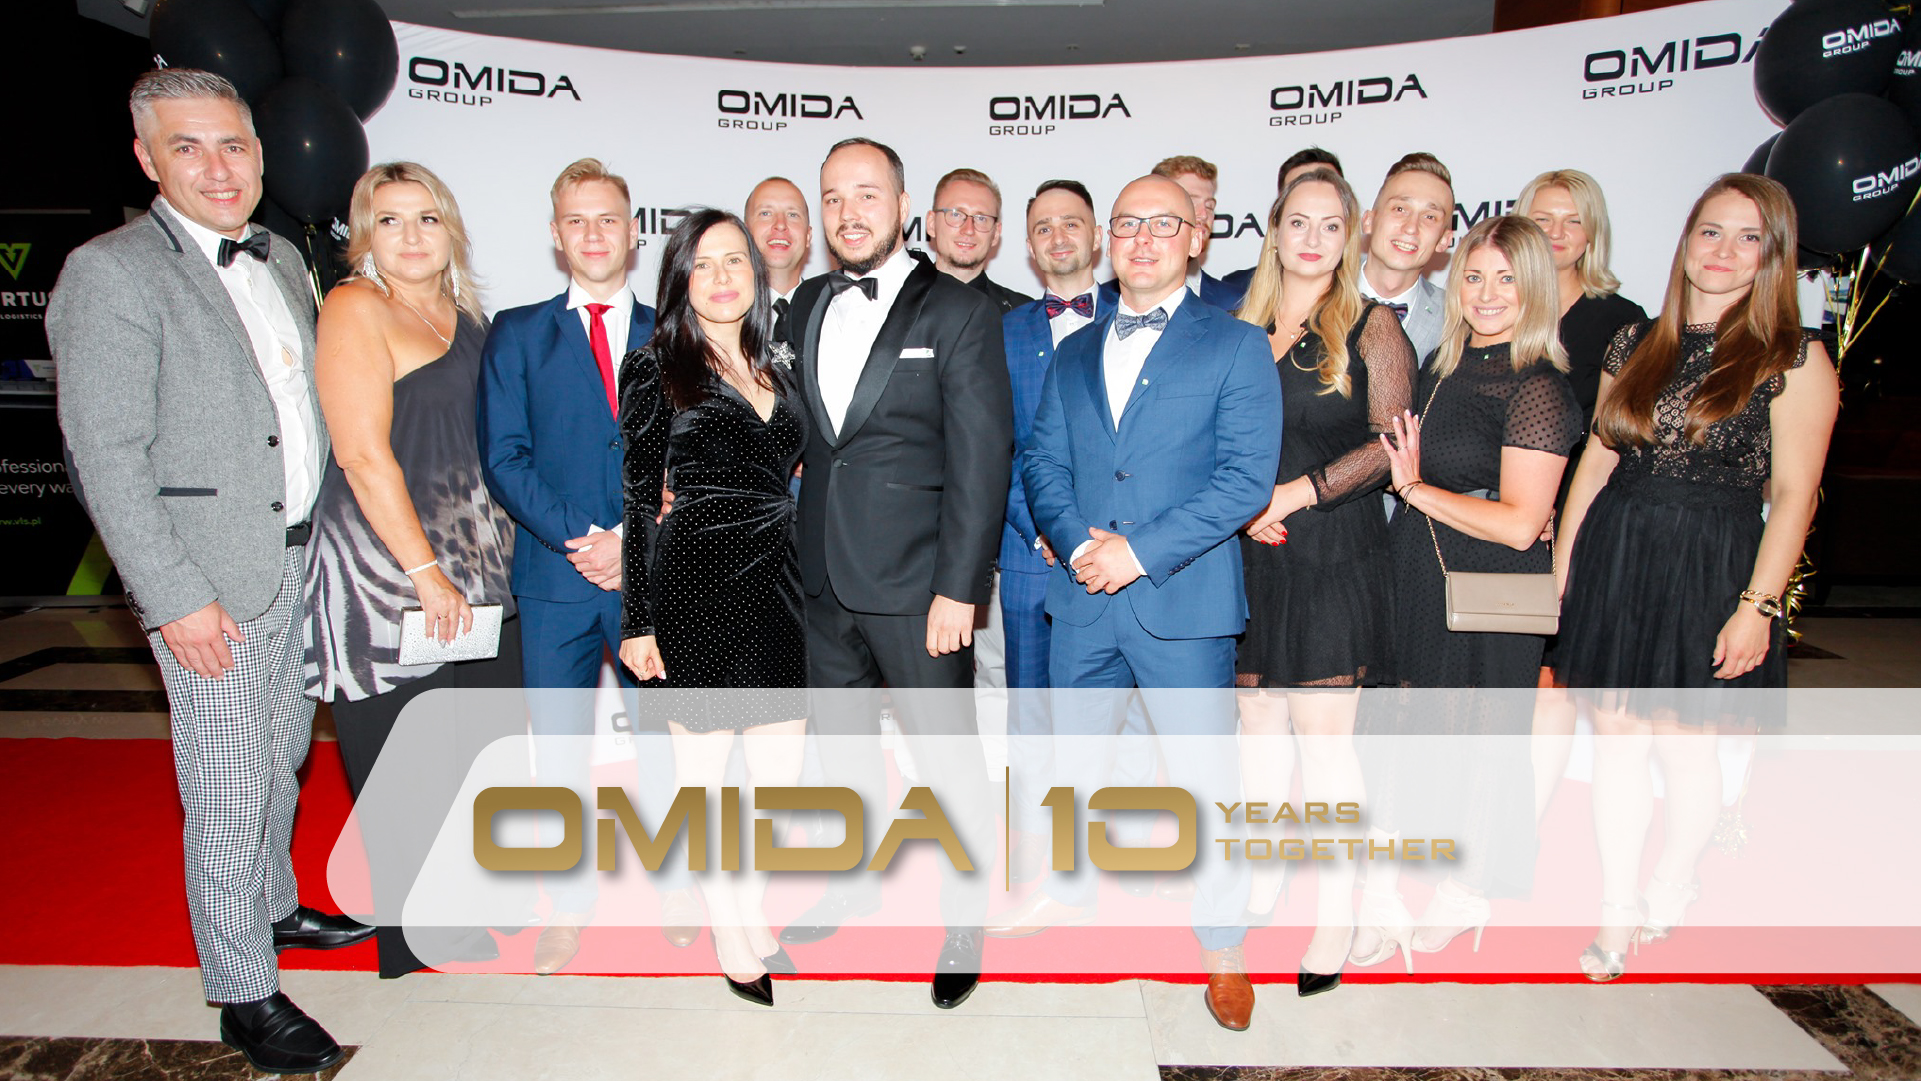 Gala 10 YEARS TOGETHER | Omida Logistics